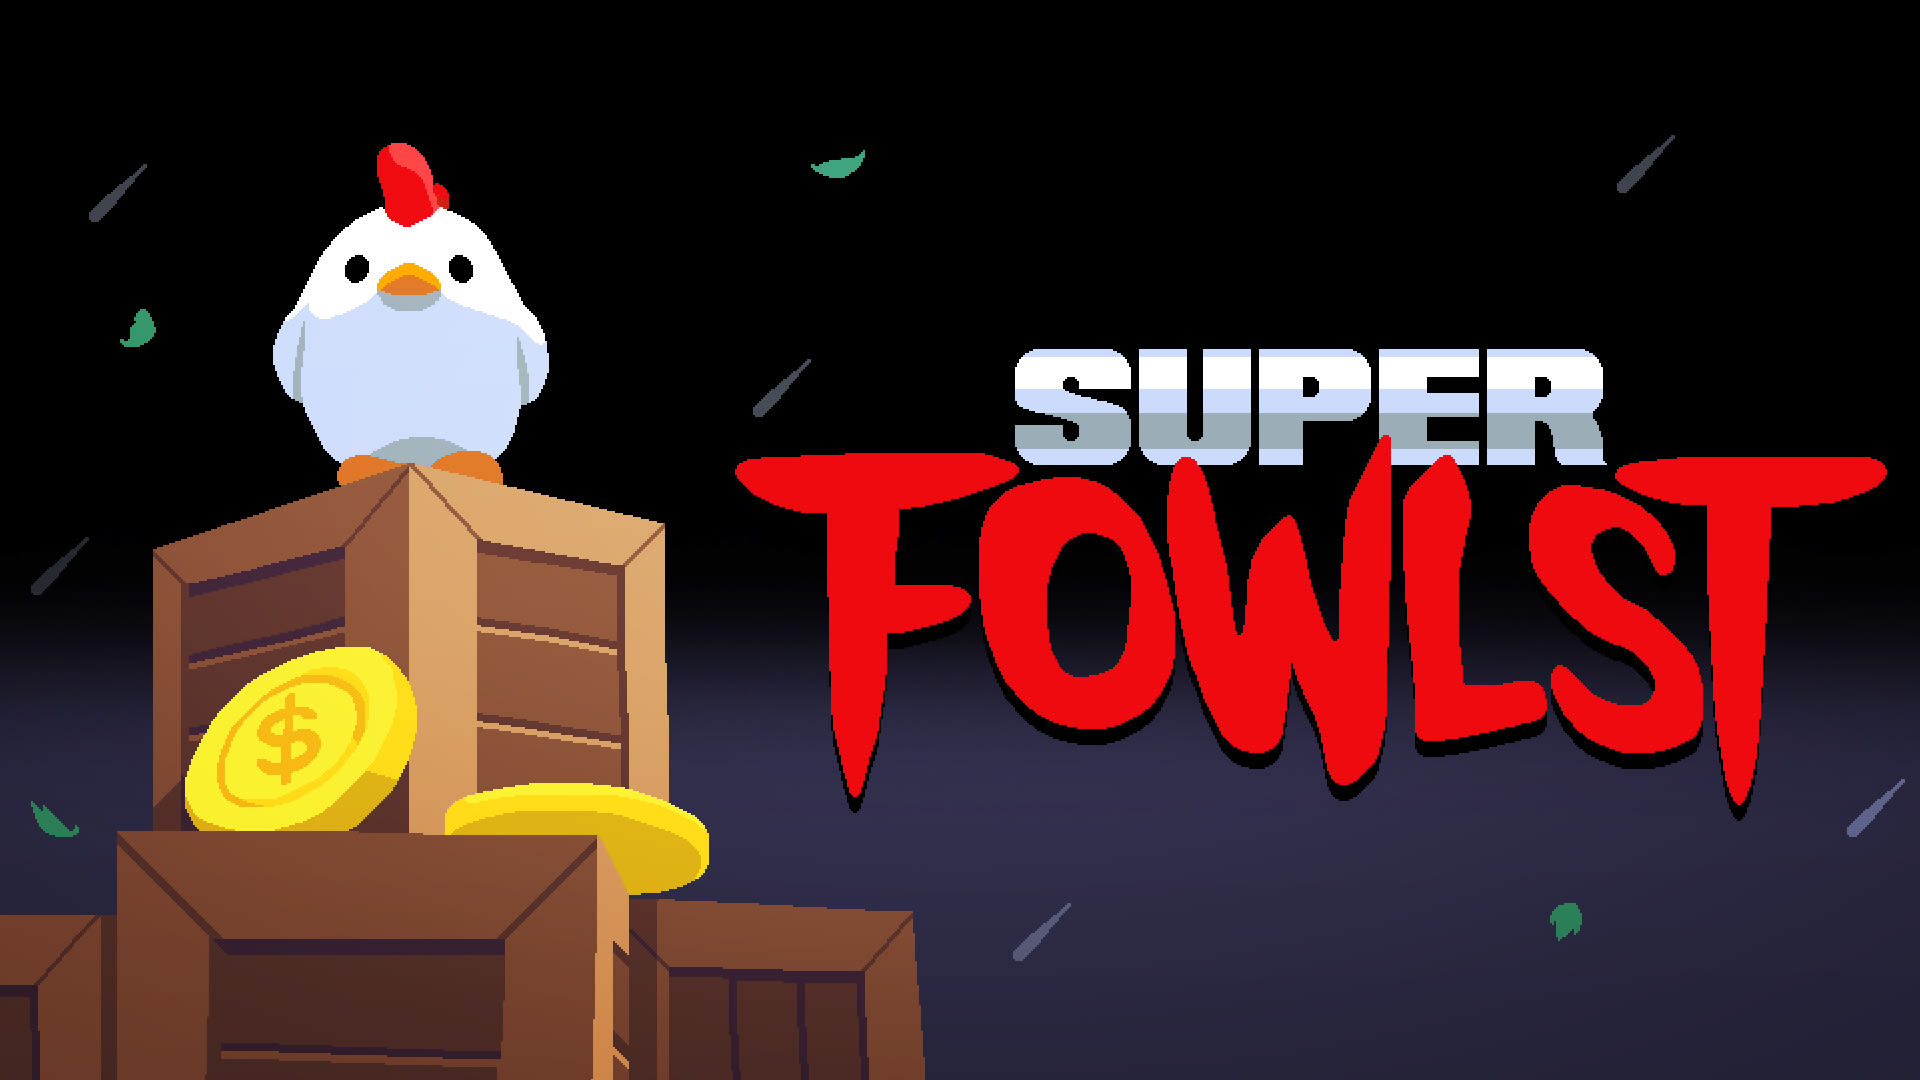 Super Fowlst